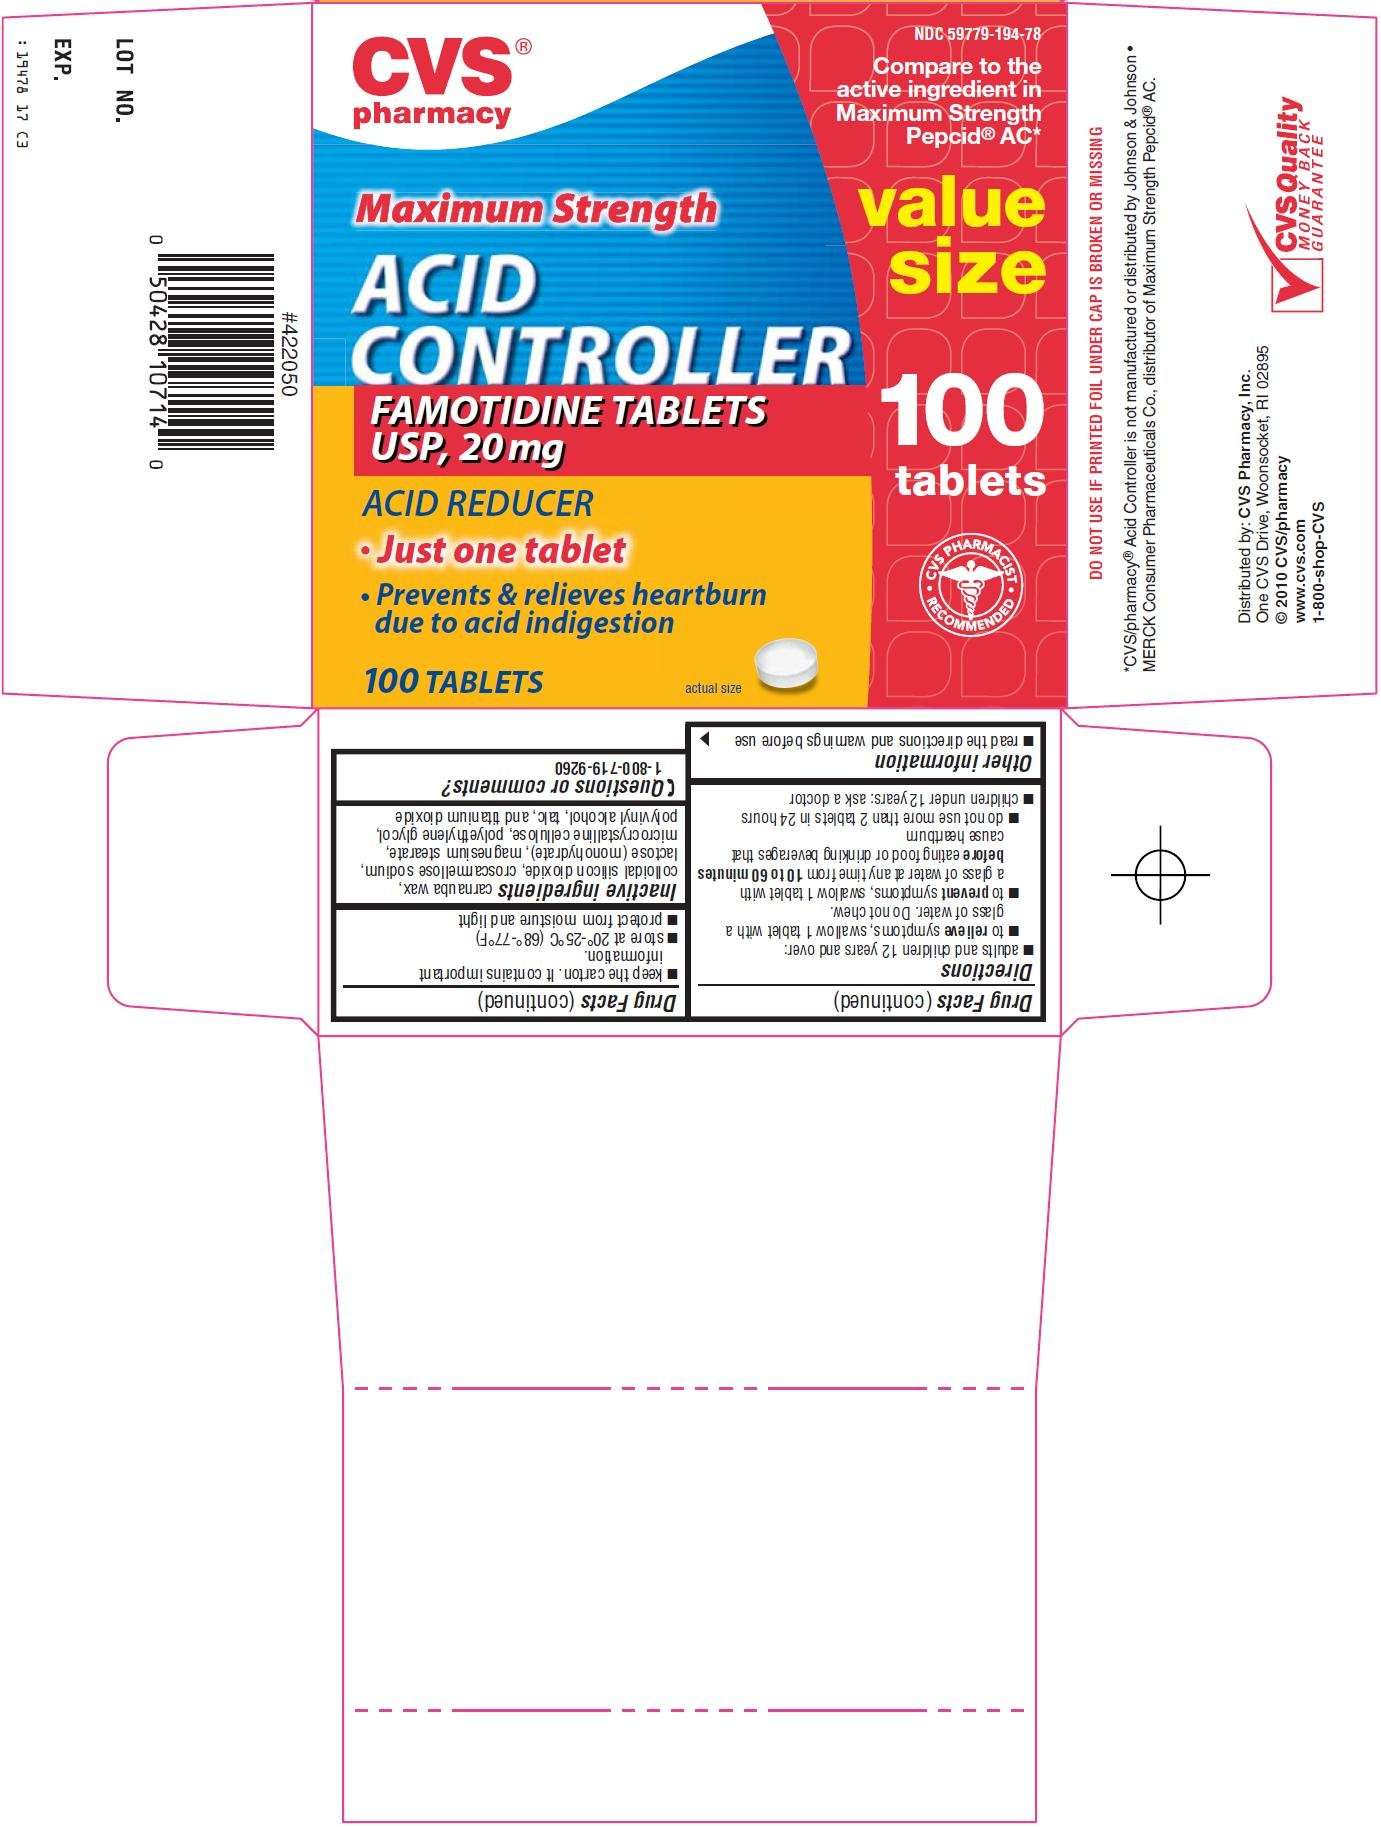 acid controller